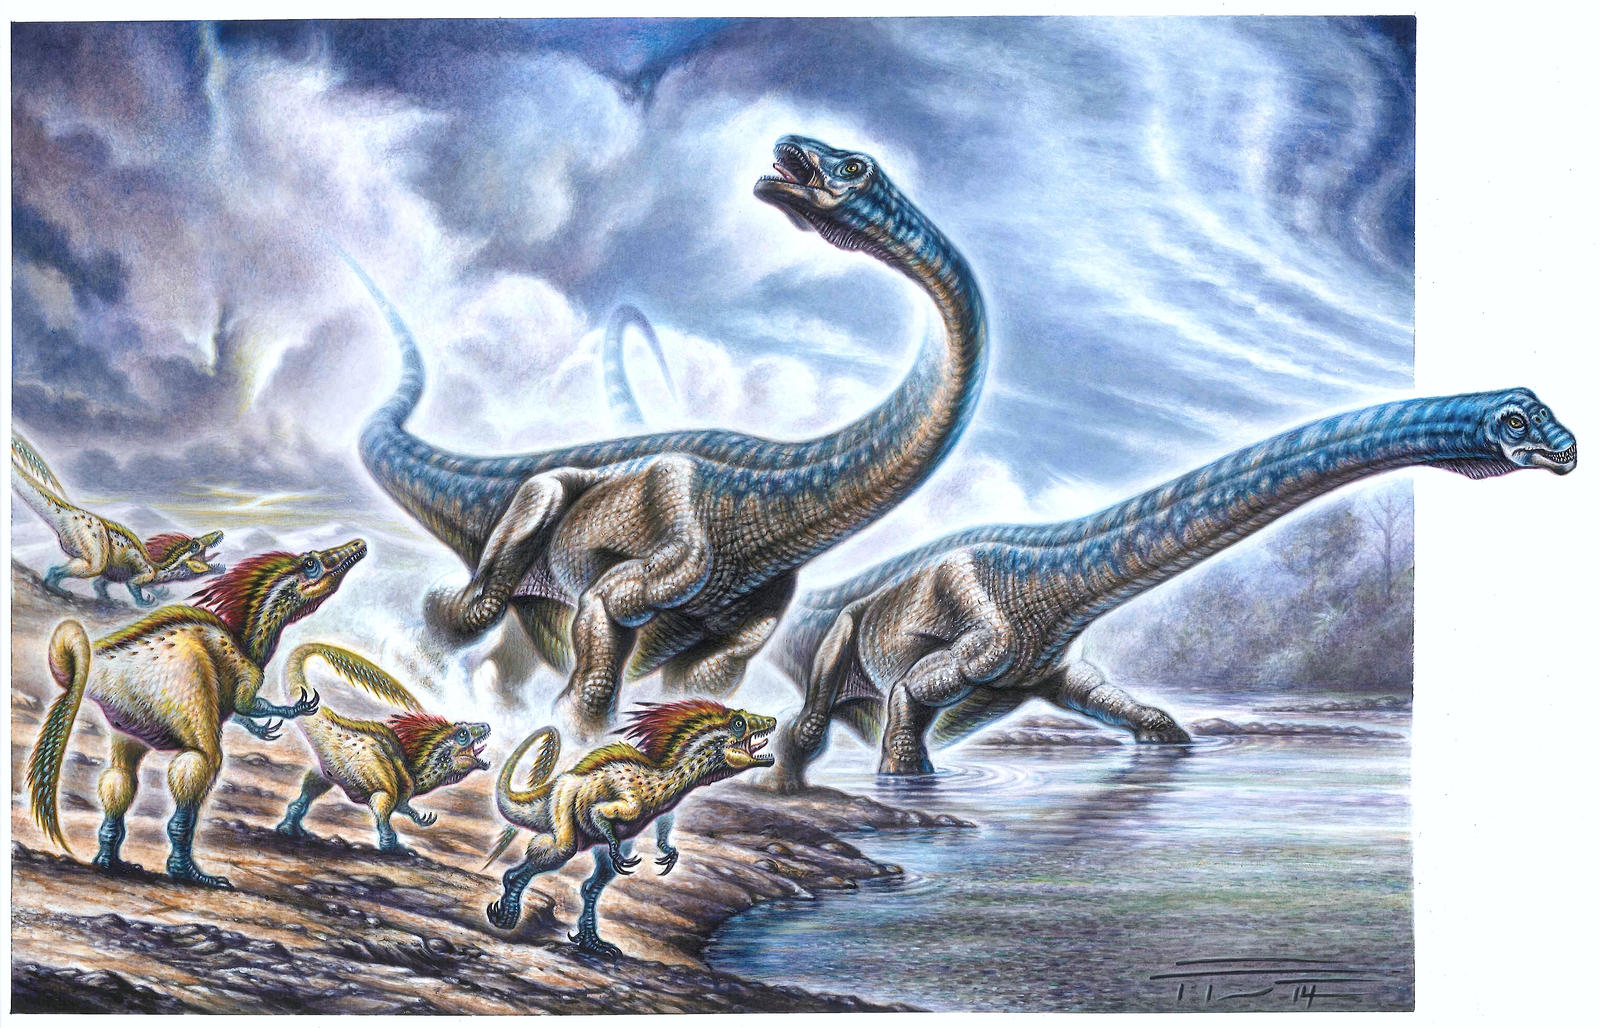 Dreadnoughtus schrani - Orkoraptor burkei